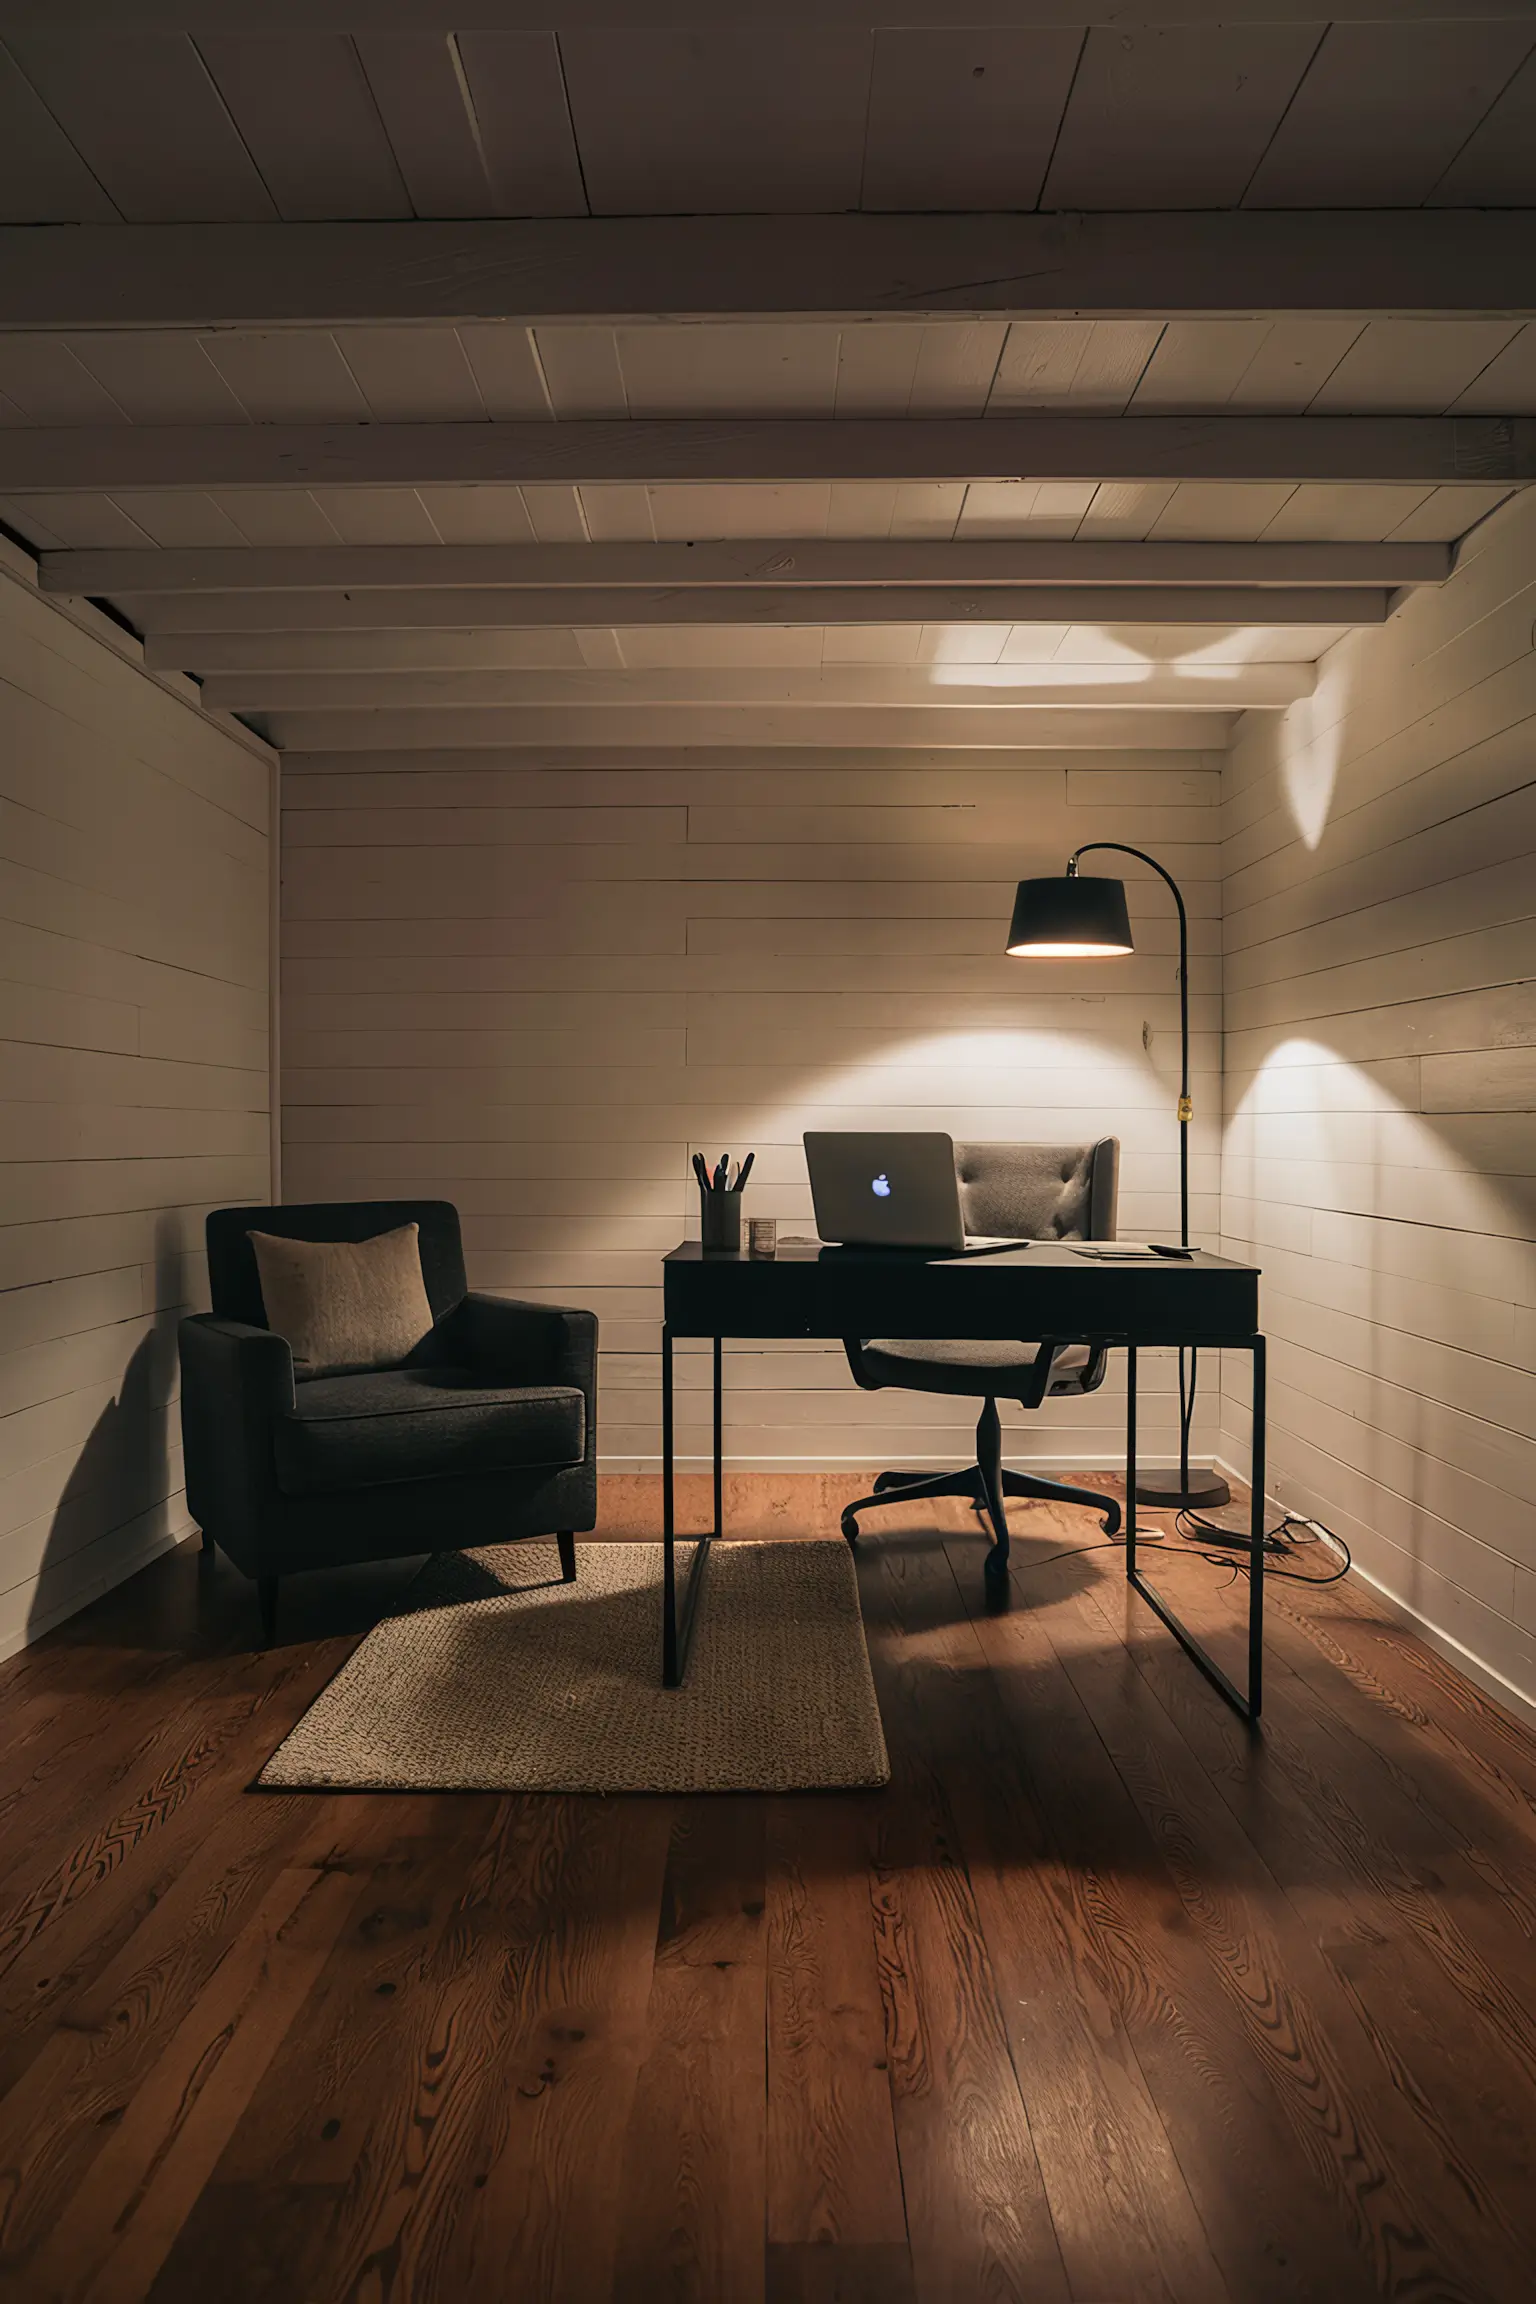 Minimalistic basement office with hardwood flooring.